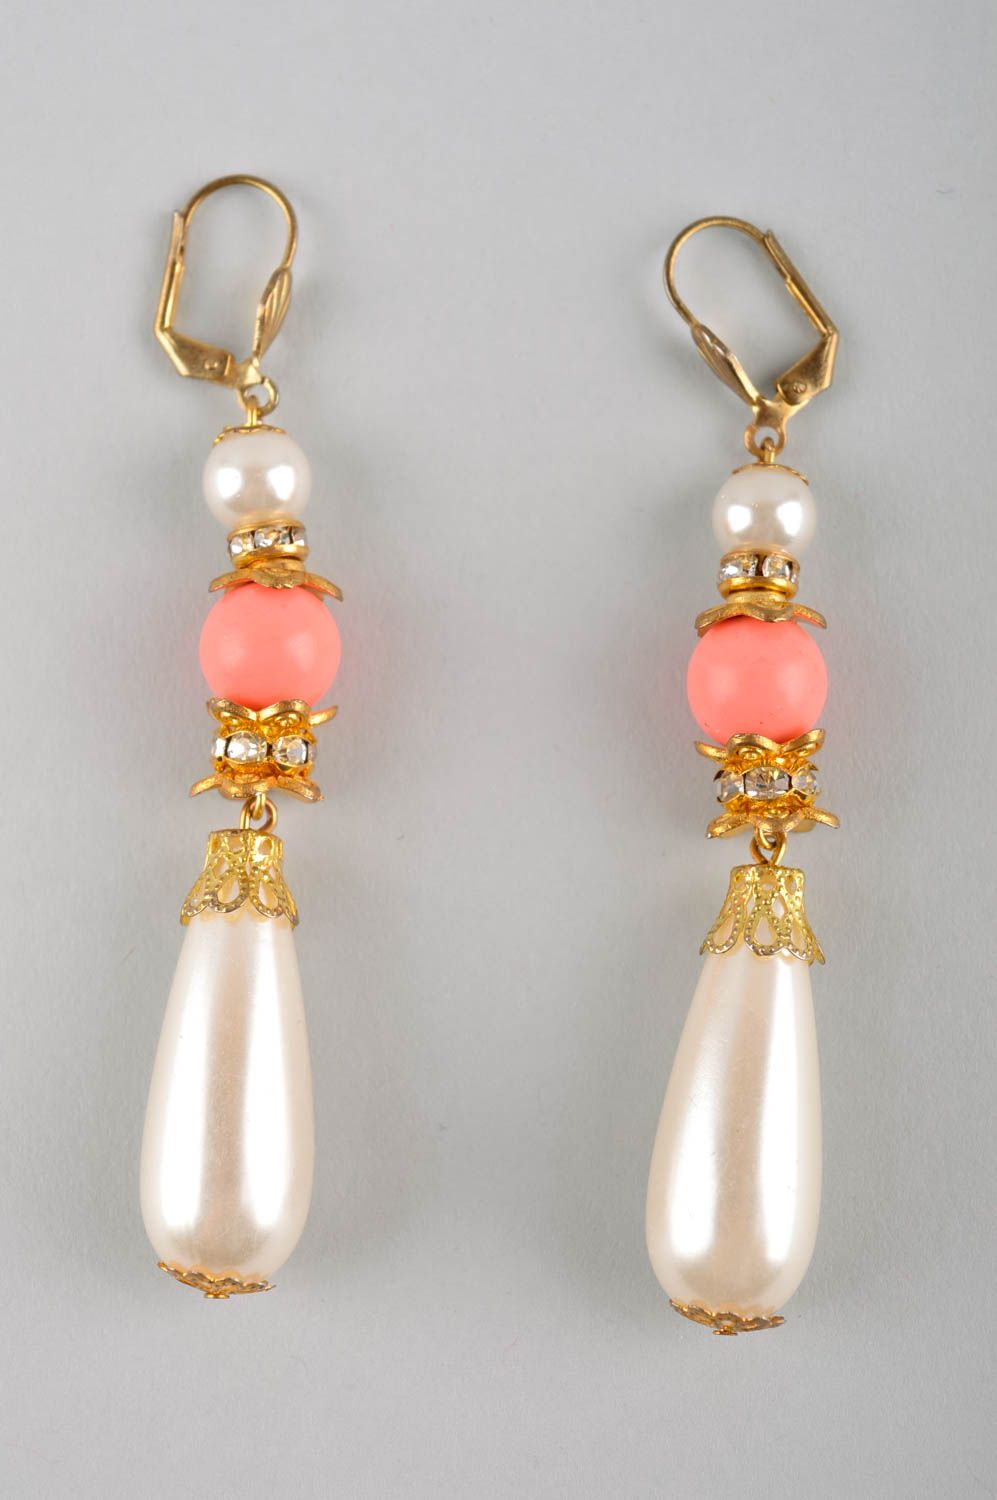 Handmade earrings pearl earrings coral jewelry designer accessories for girls photo 3